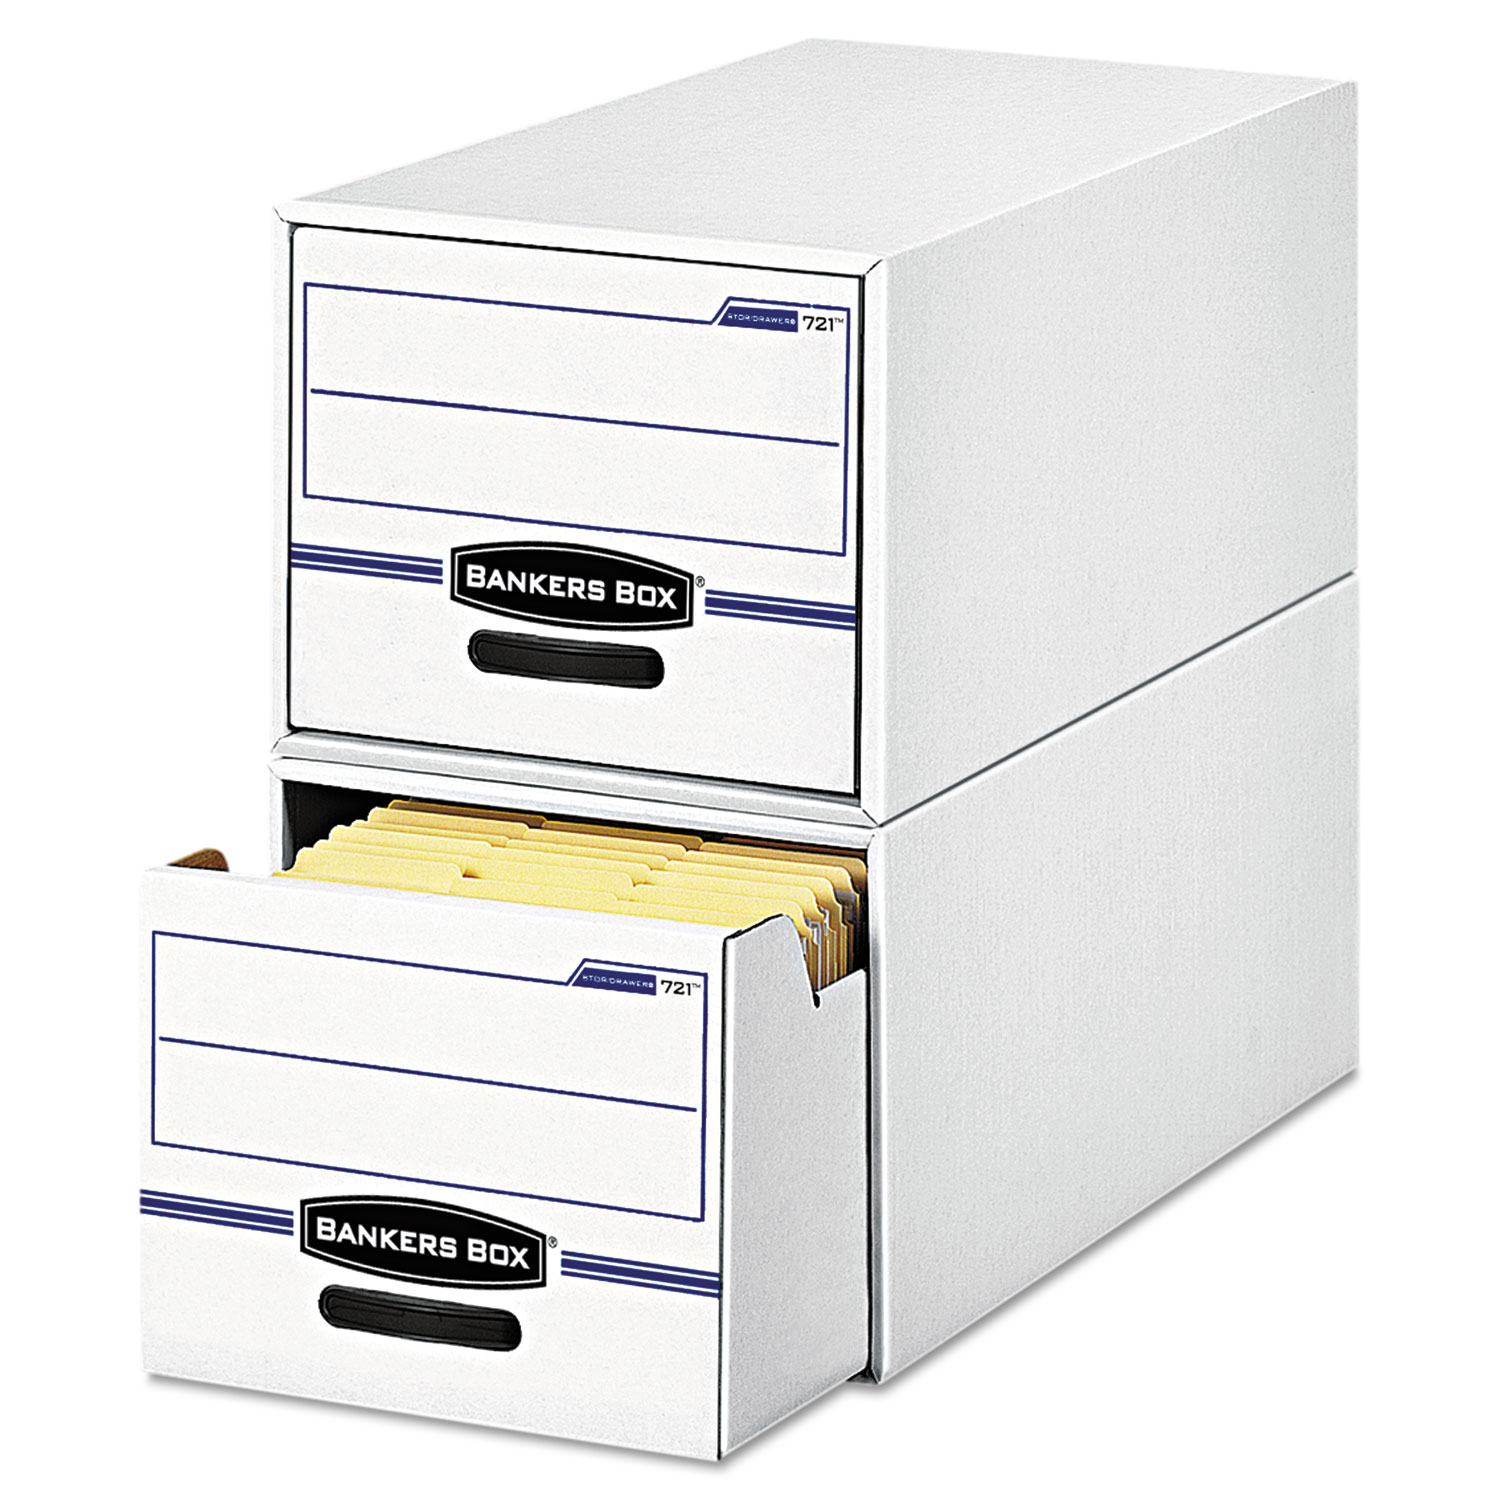  Bankers Box 00722 STOR/DRAWER Basic Space-Savings Storage Drawers, Legal Files, 16.75 x 19.5 x 11.5, White/Blue, 6/Carton (FEL00722) 